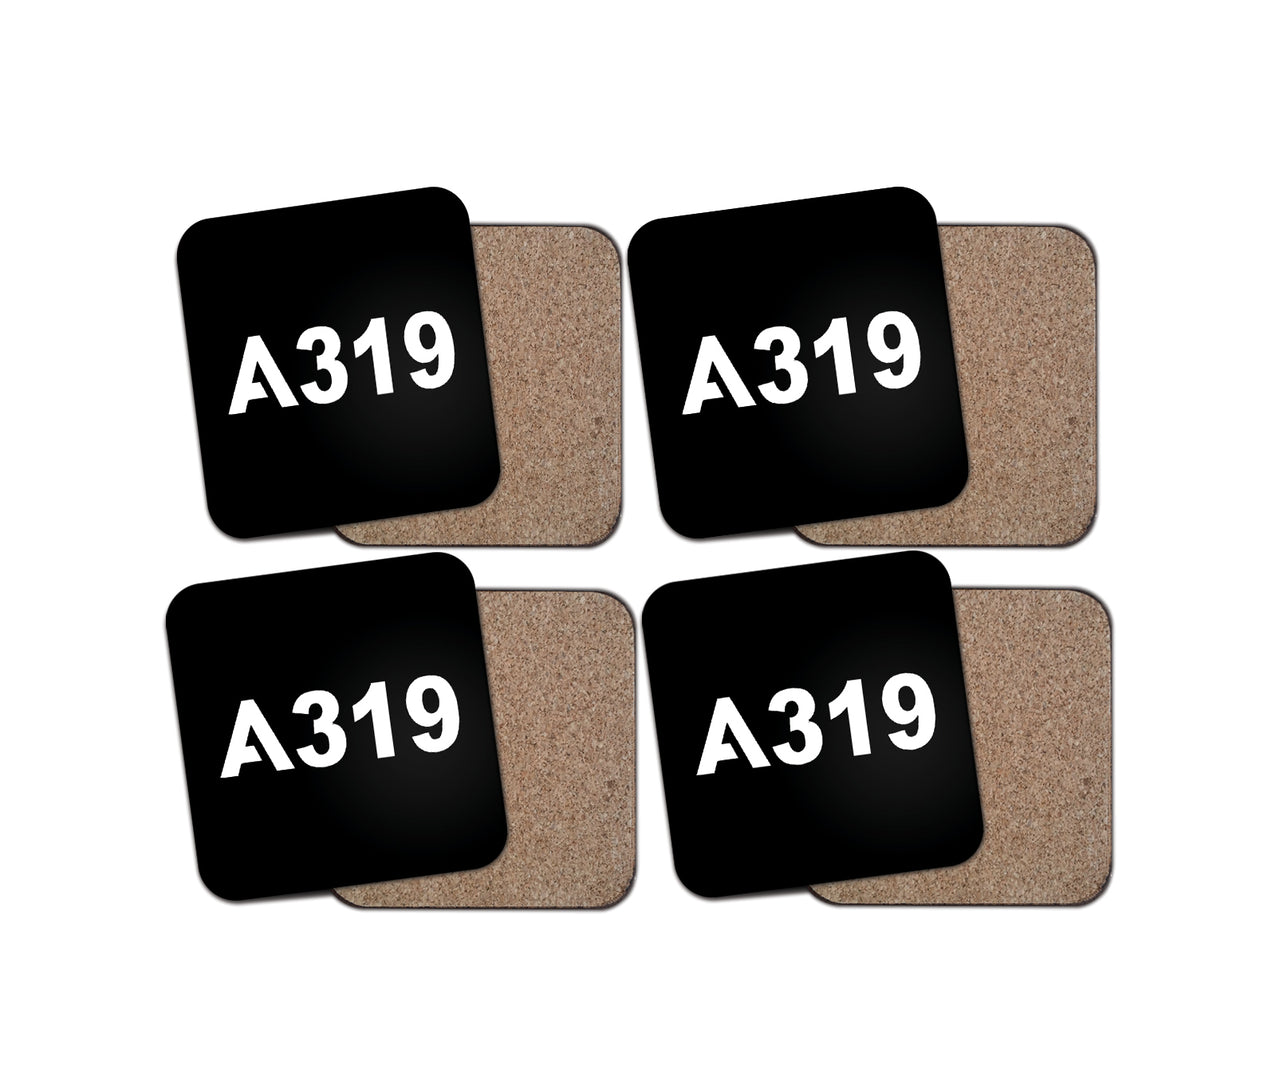 A319 Flat Text Designed Coasters